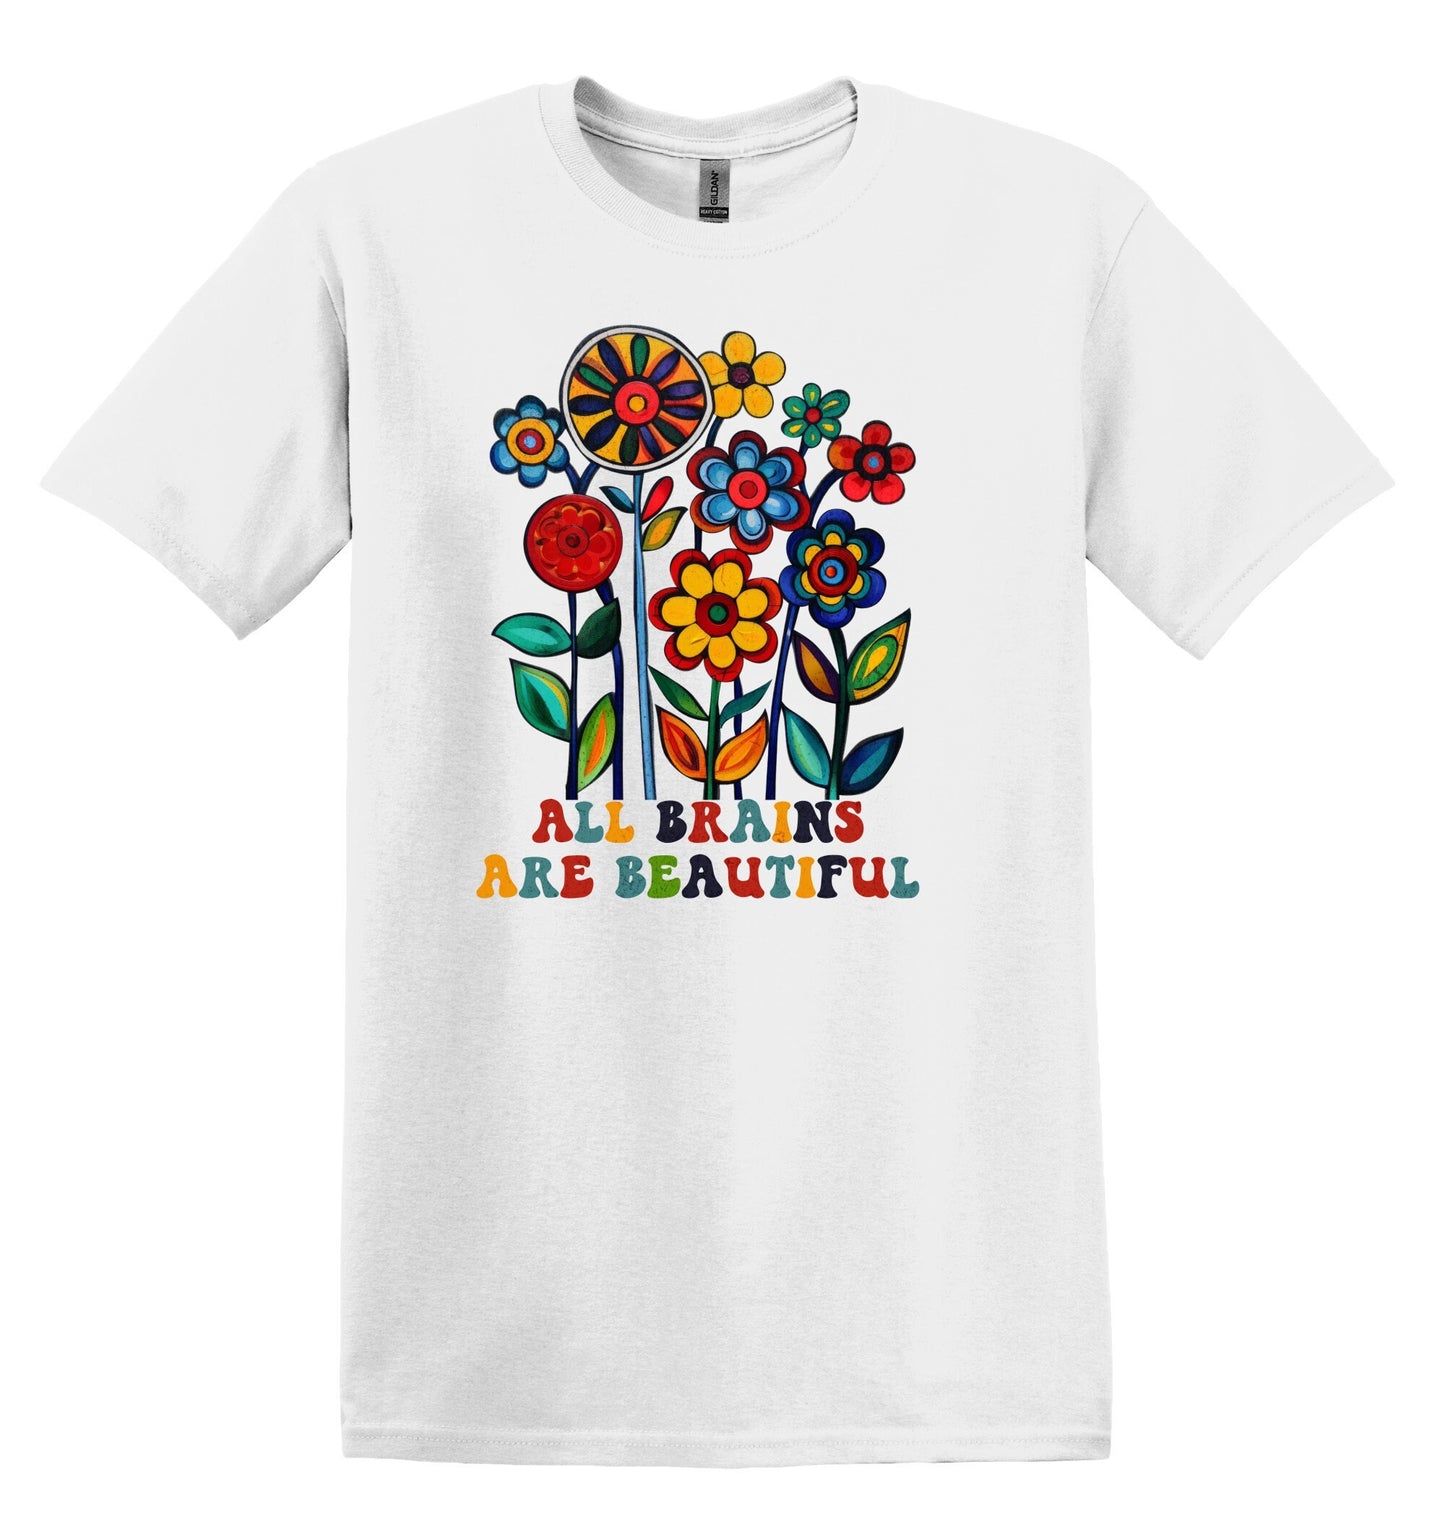 Neurodiversity Shirt, All Brains are Beautiful Shirt, Floral Neurodiversity Shirt, FlowerShirt, Floral Shirt, Mental Heath Shirt